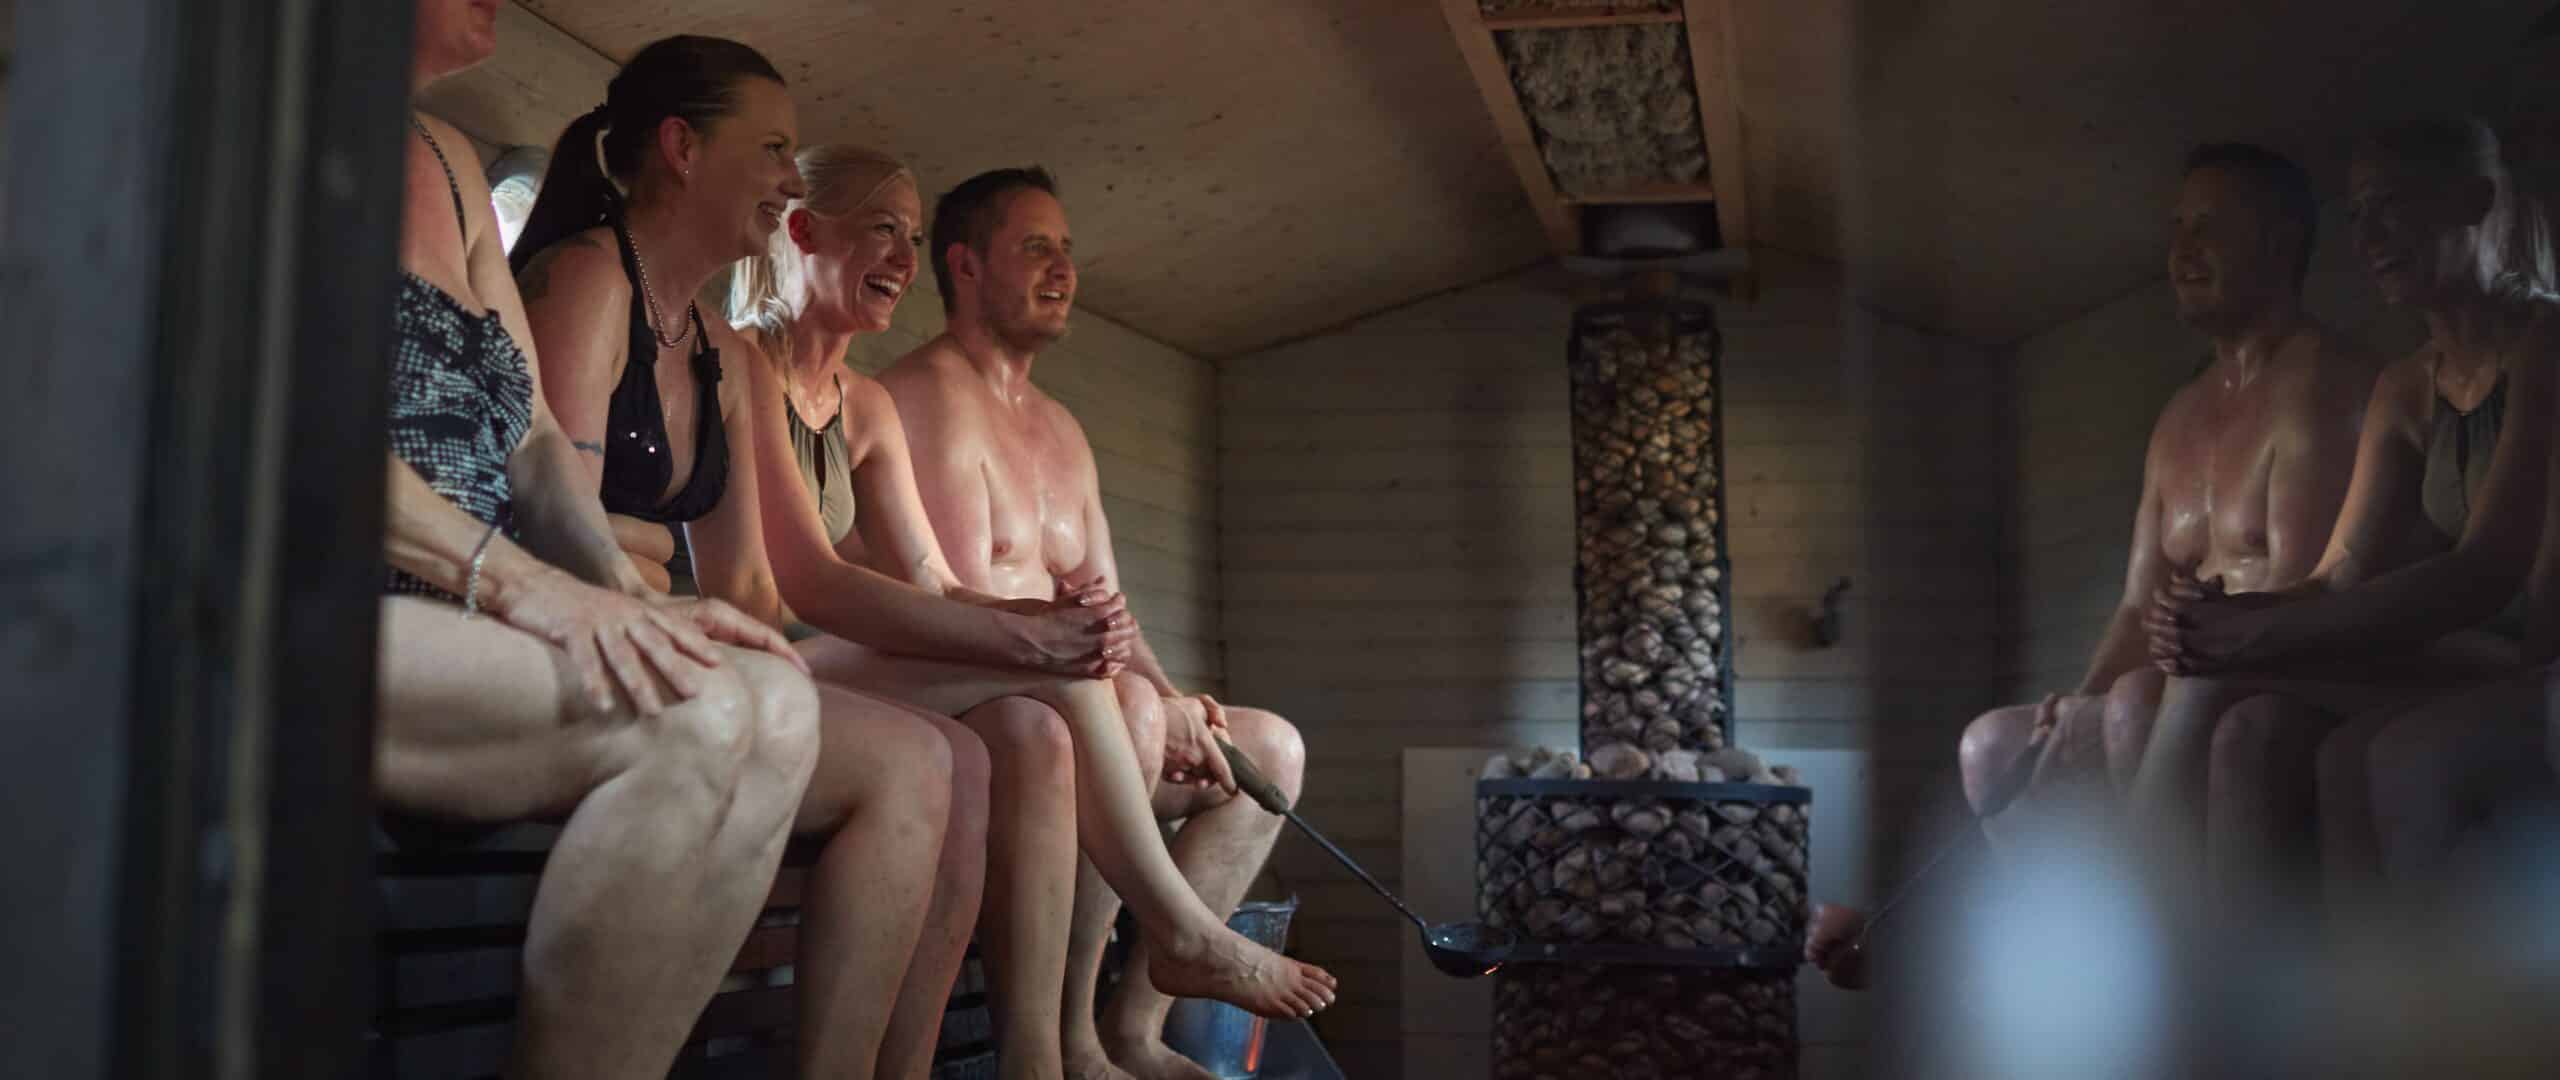 People sitting in a sauna